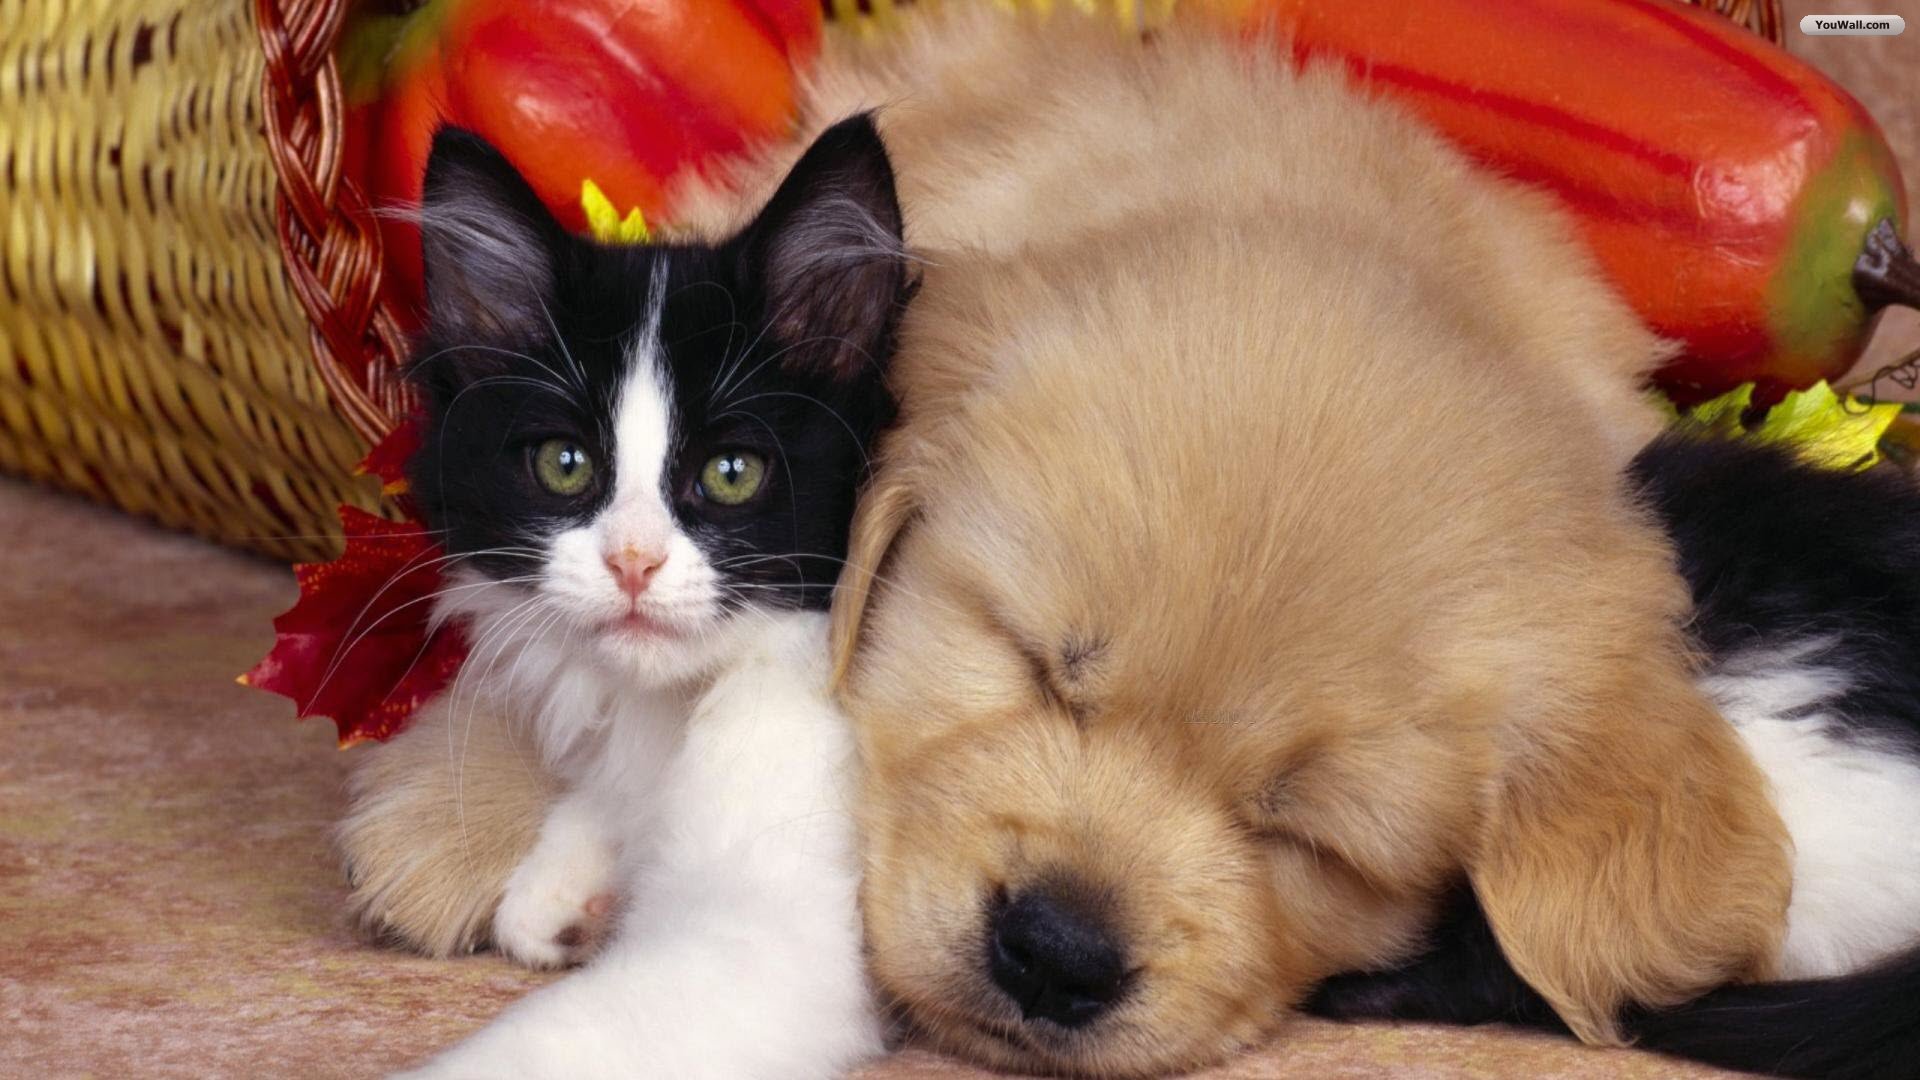 Cute Dog and Cat Wallpaper 